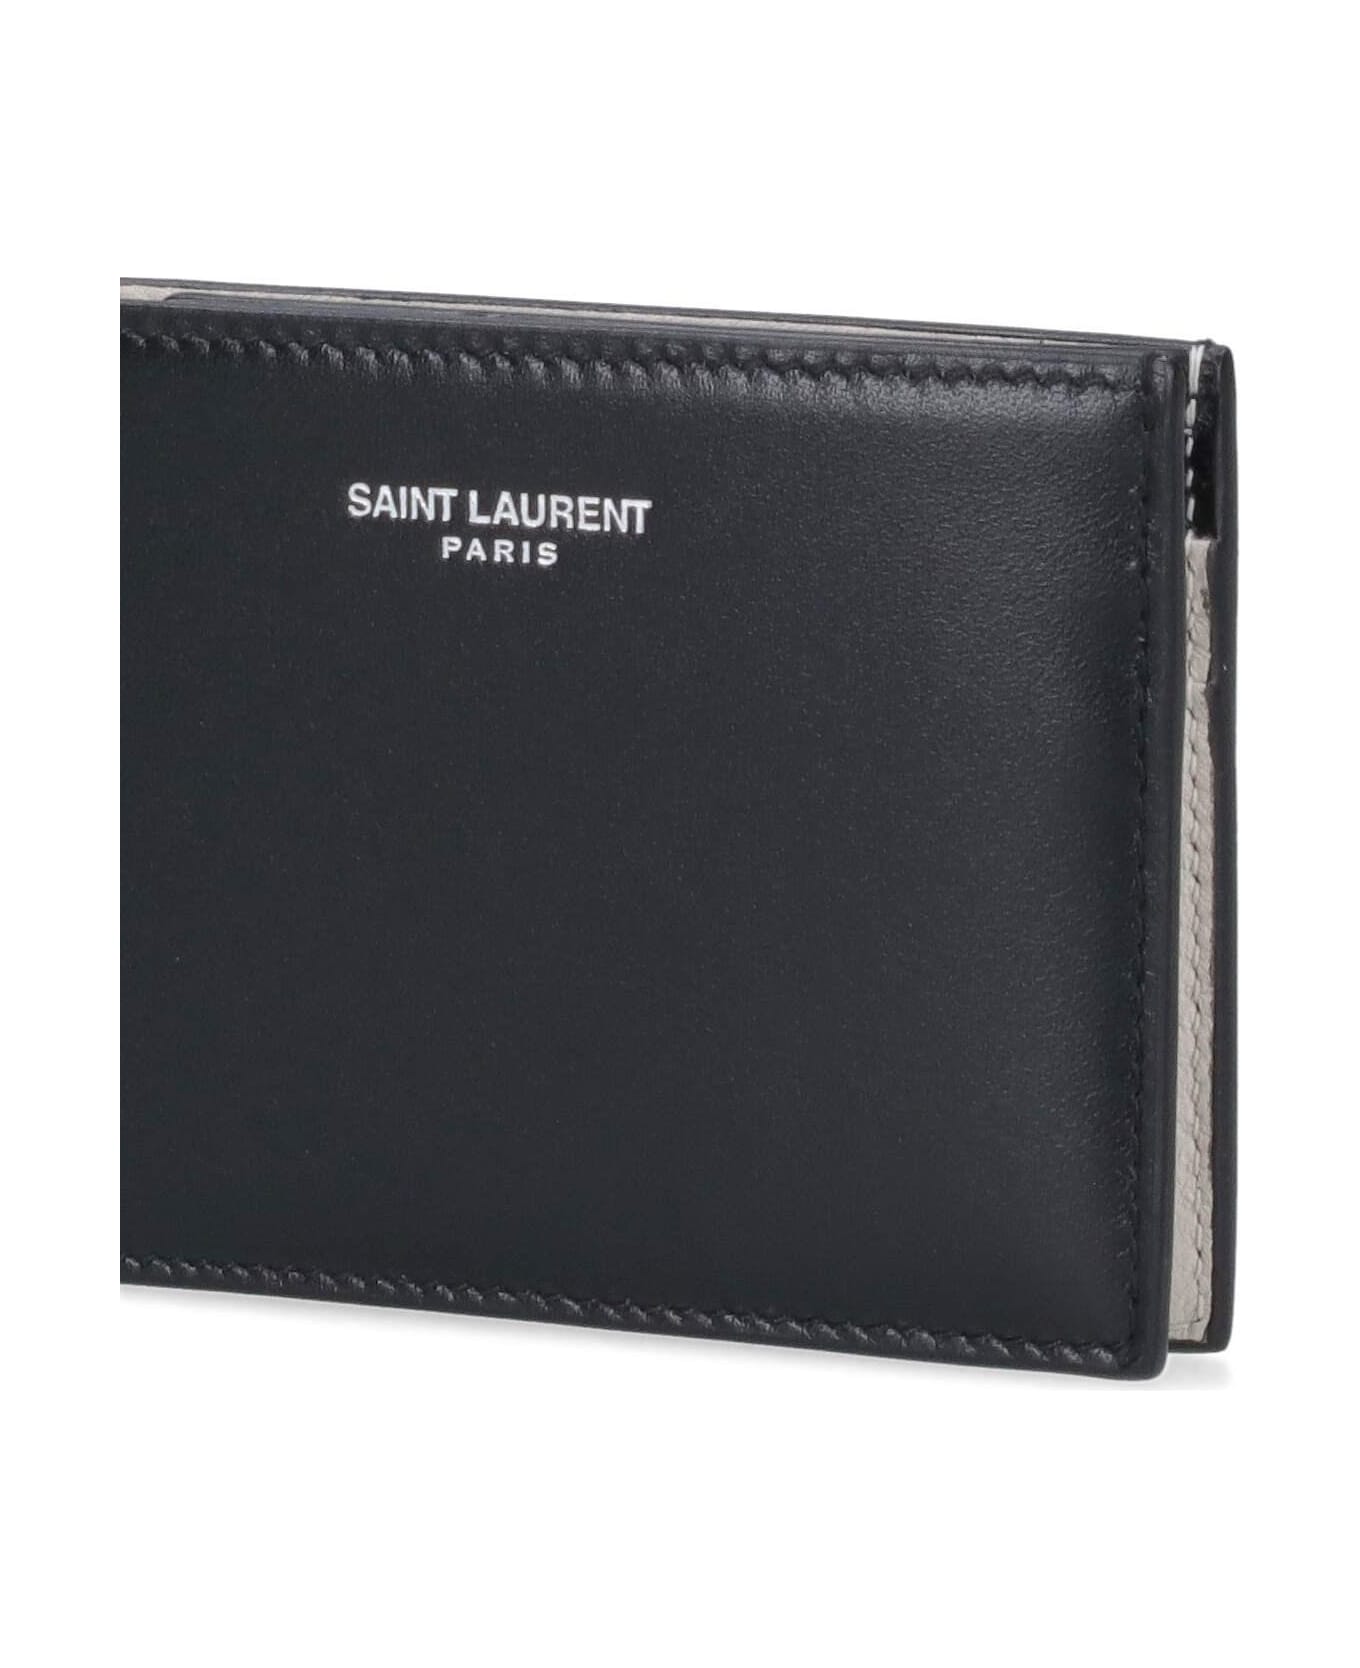 Saint Laurent 'paris' Bi-fold Card Holder - Nero Crema Soft